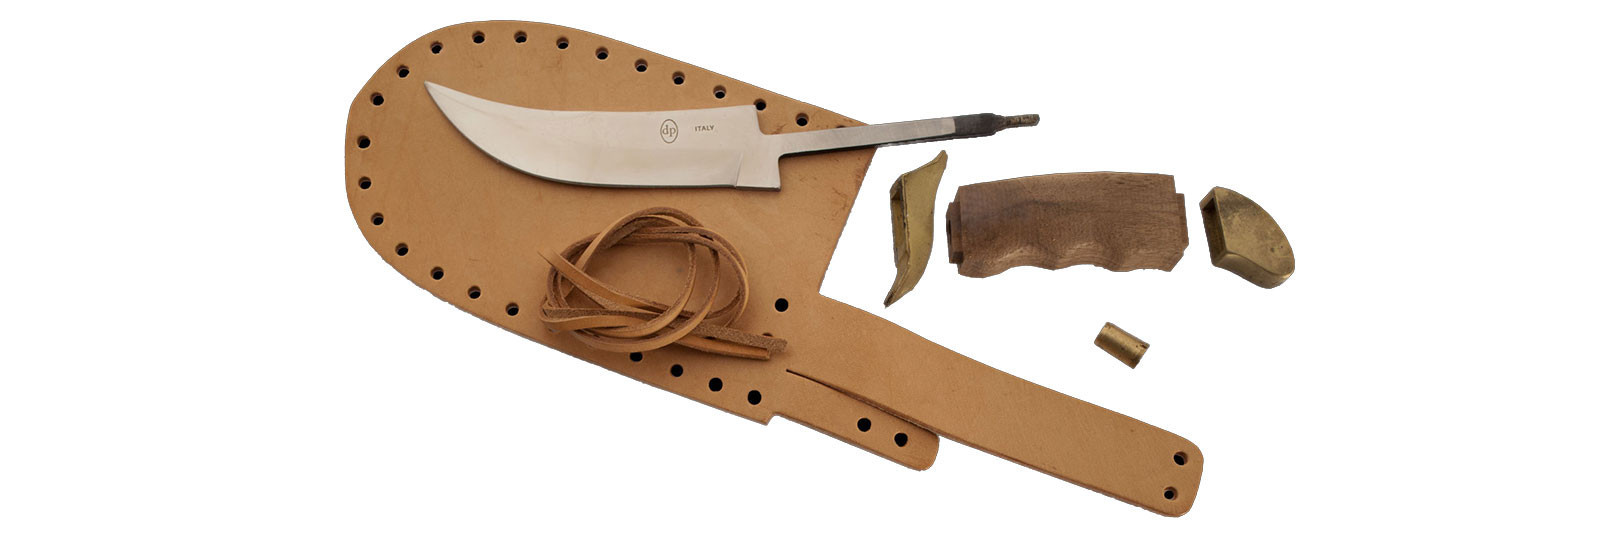 Skinner knife kit with sheath